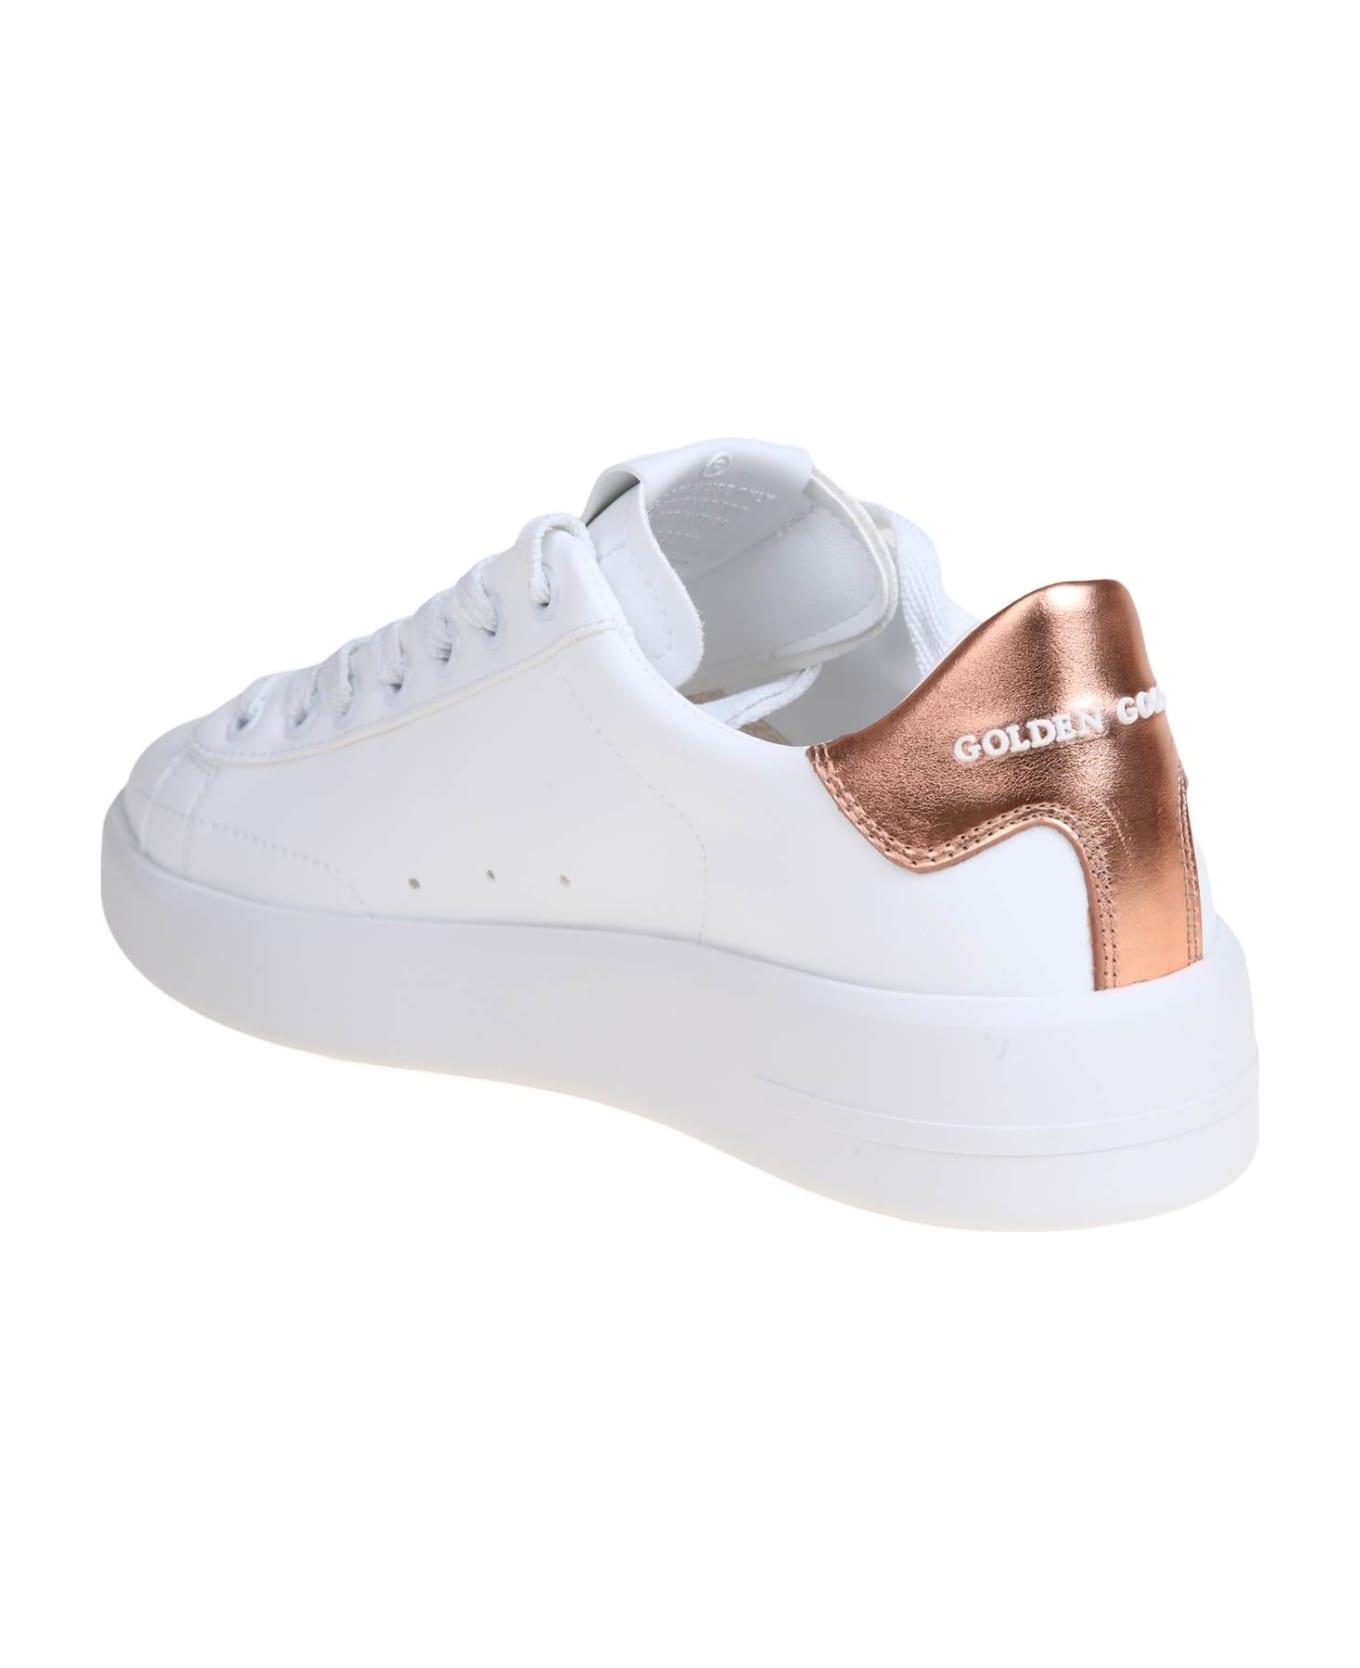 Golden Goose Pure Star Sneakers - White/Bronze